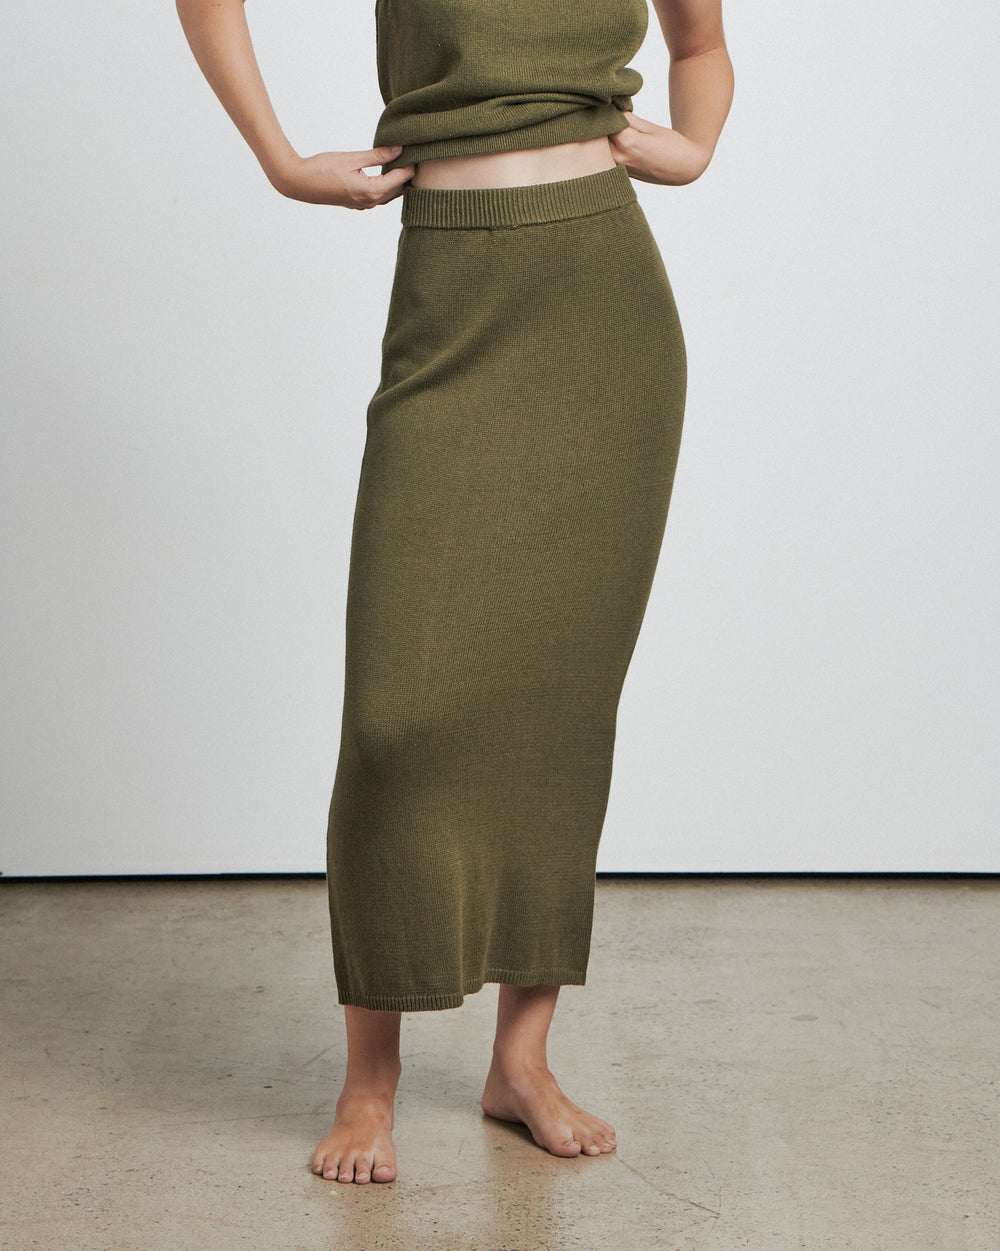 The Knitted Midi Skirt